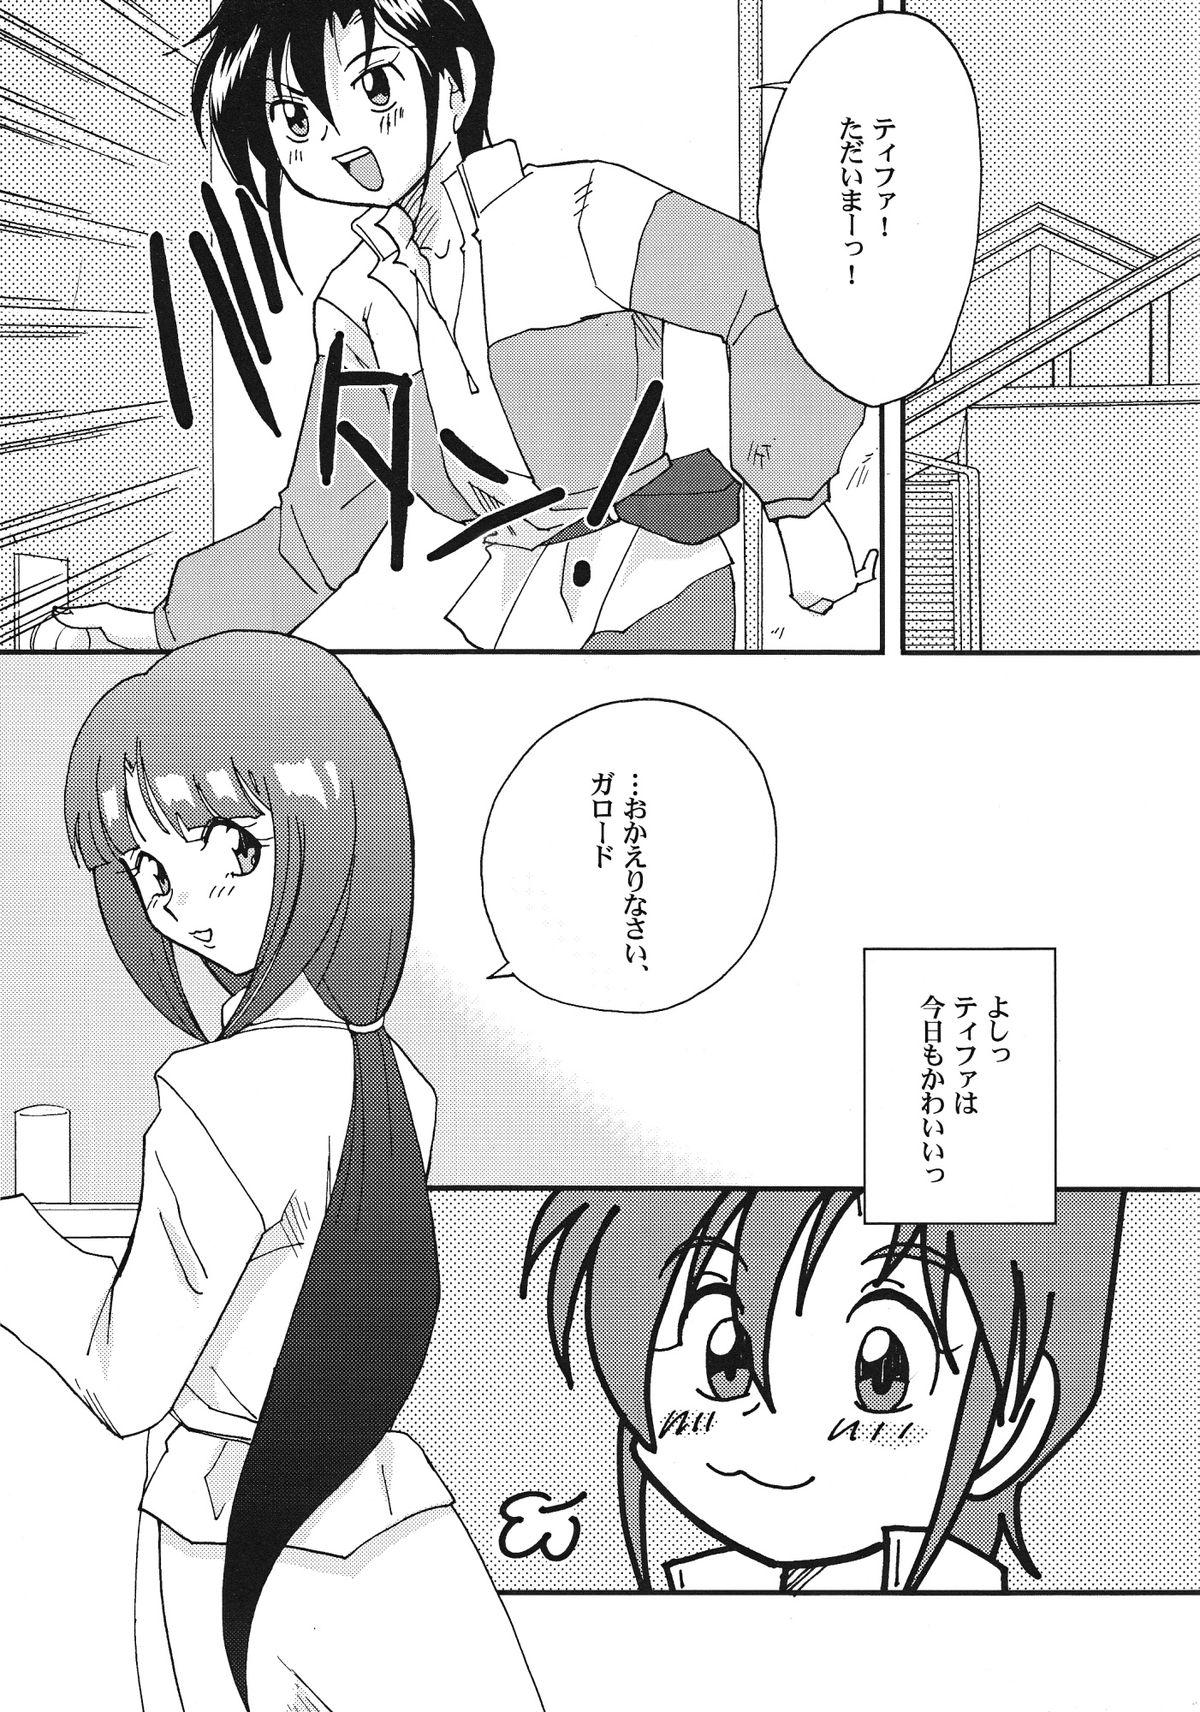 Perverted DREAMS - Gundam x Messy - Page 6